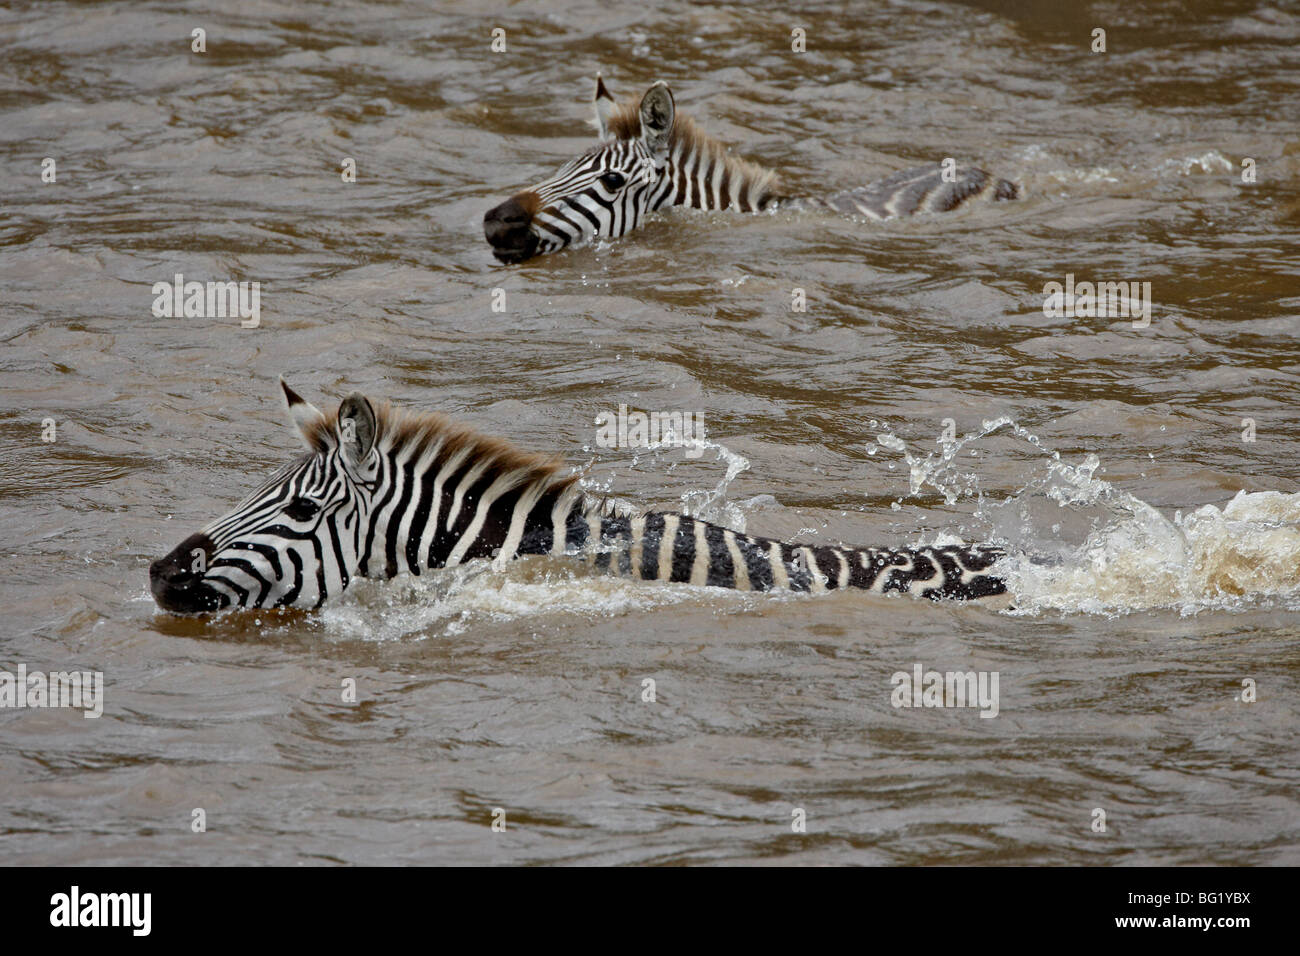 Common zebra (Burchell's zebra) (Equus burchelli) crossing the Mara River, Masai Mara National Reserve, Kenya, East Africa Stock Photo